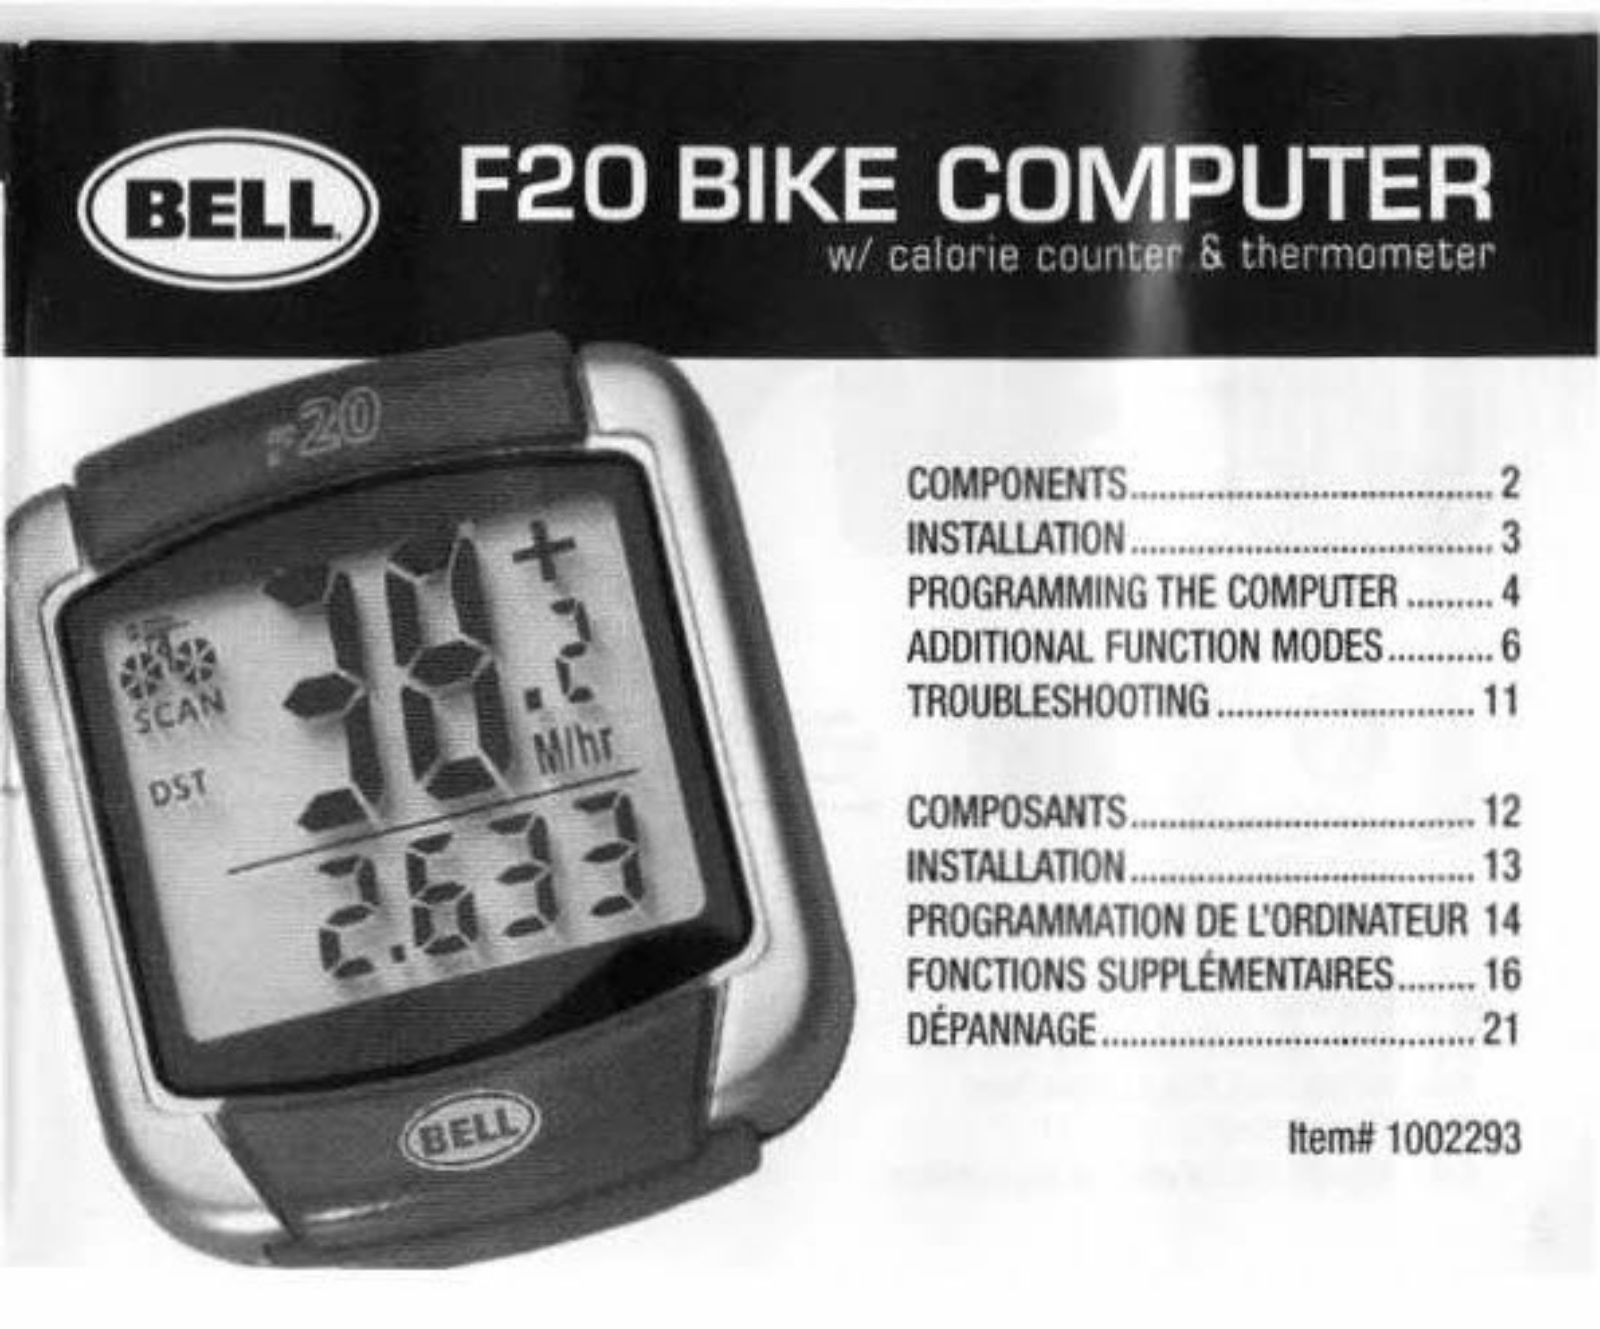 Bell F20 Manual